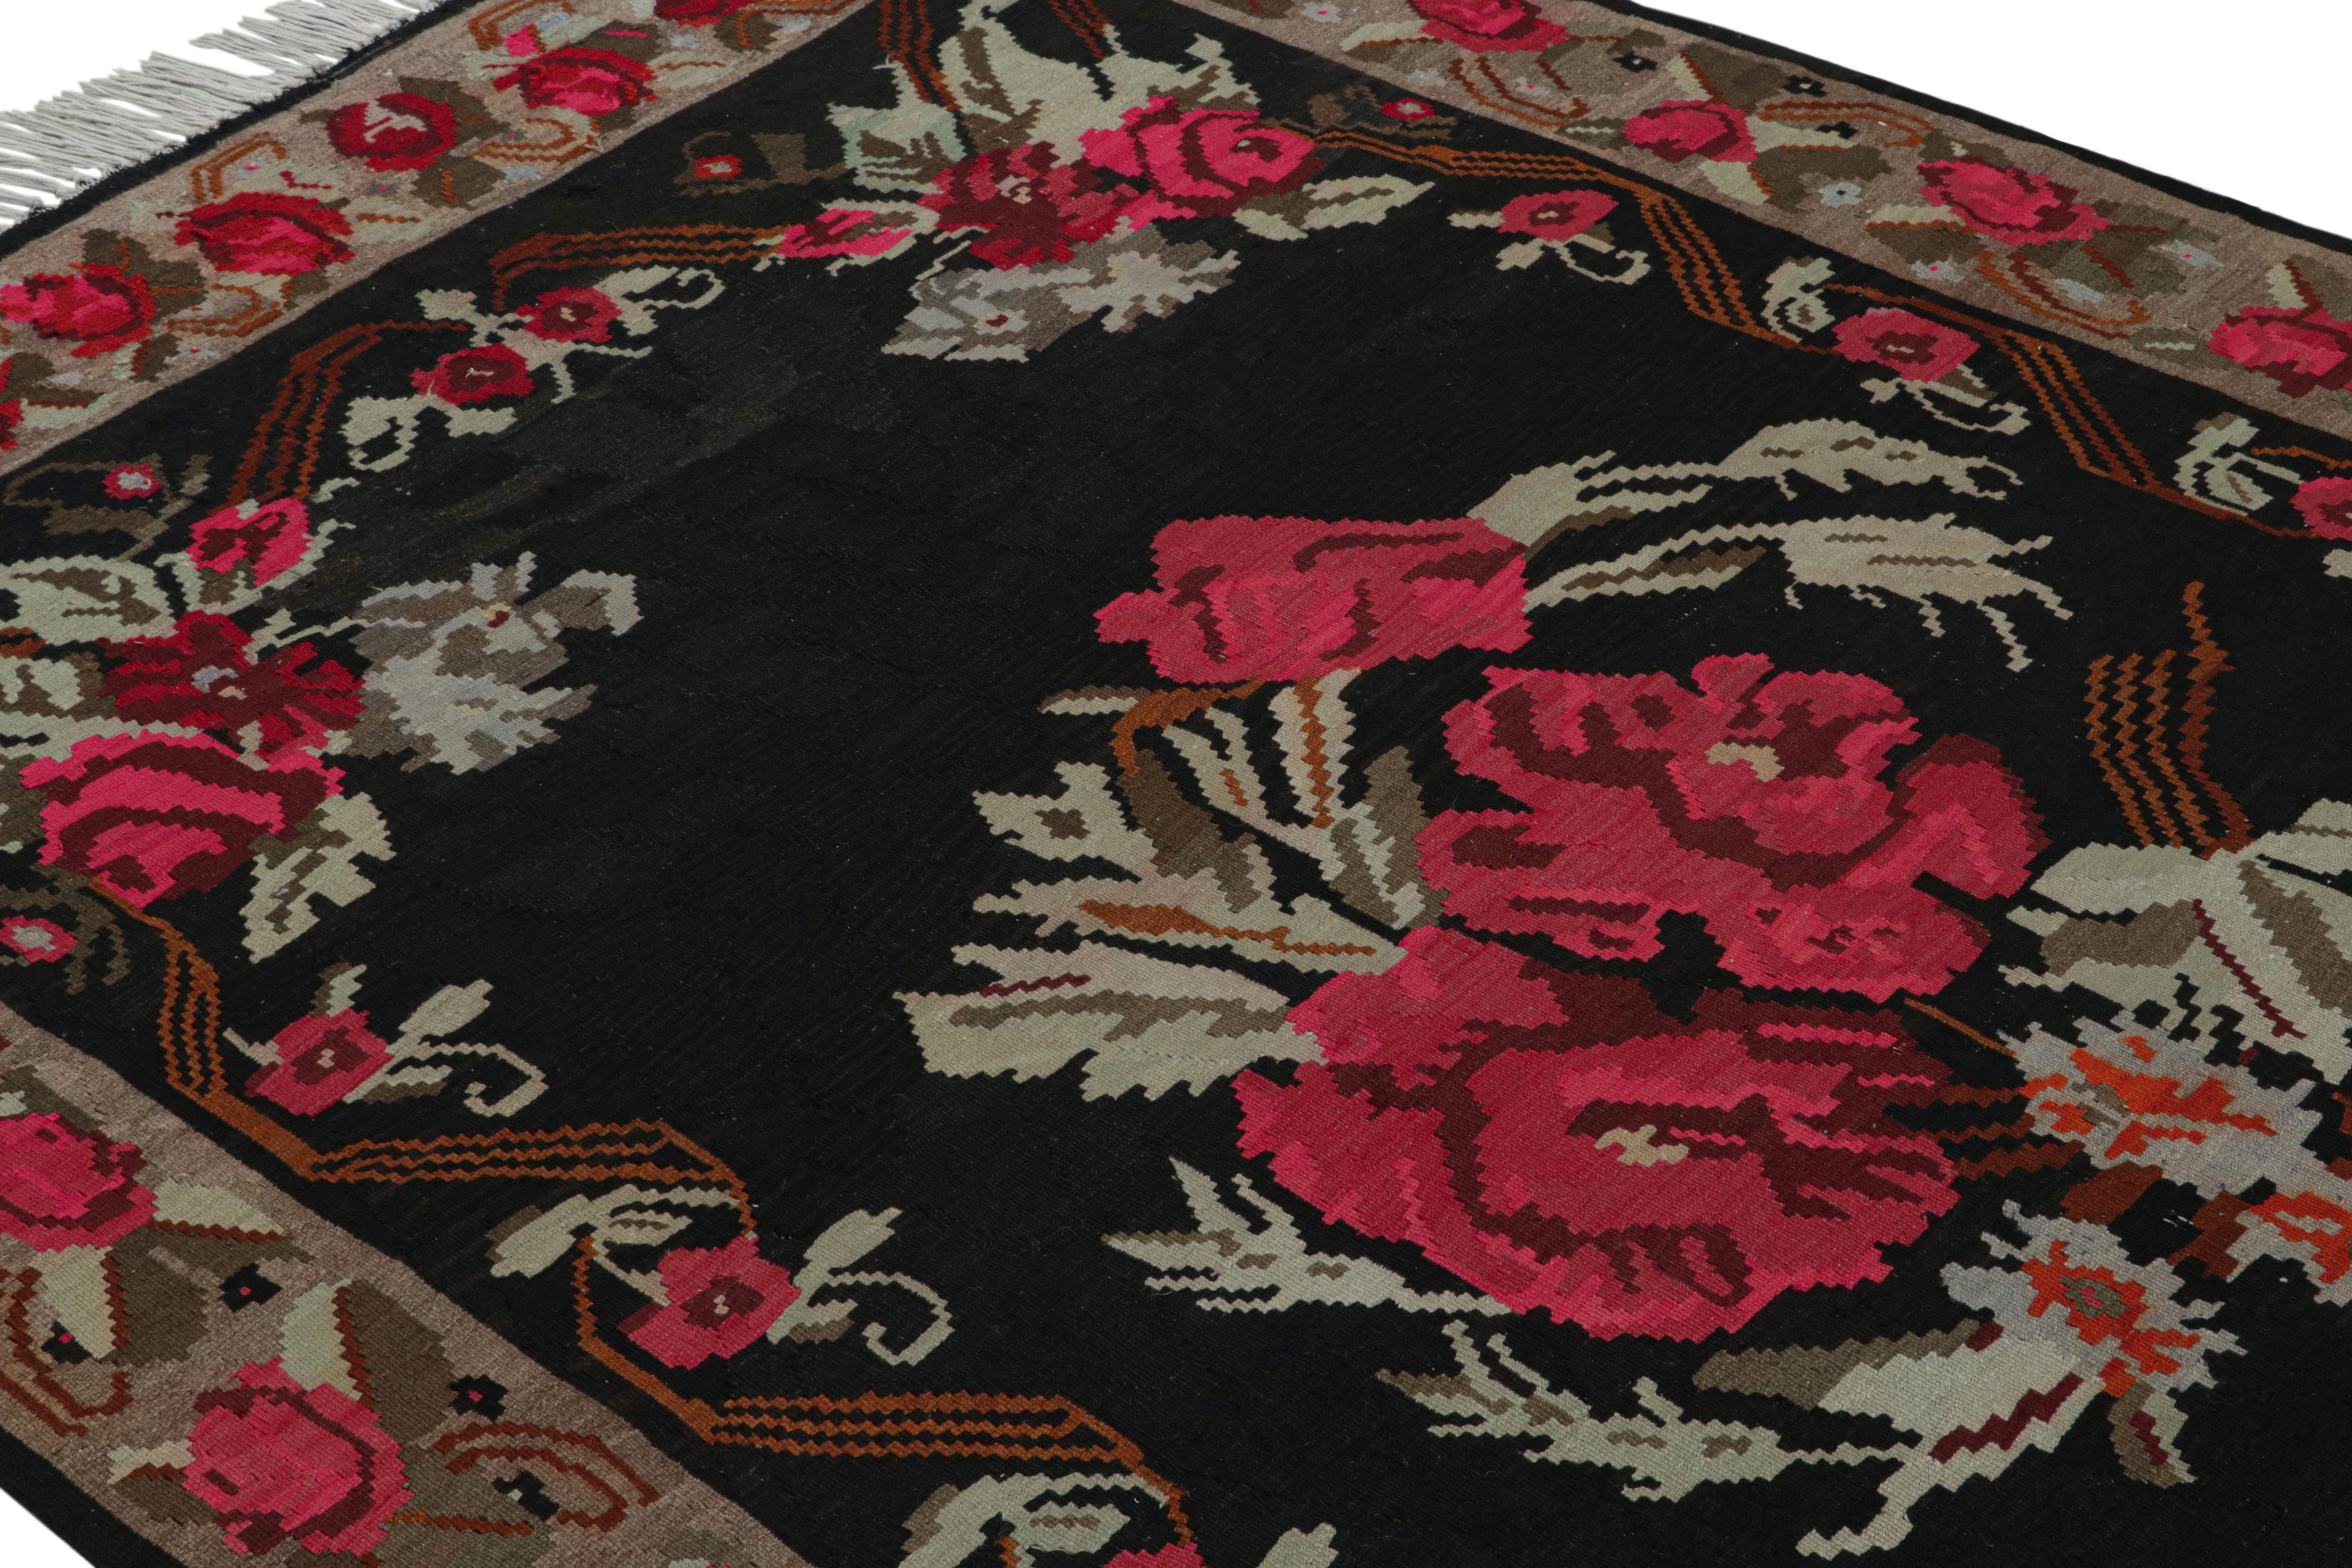 Turkish Midcentury Kilim Rug Vintage Black Red Floral Pattern Flat-Weave by Rug & Kilim For Sale